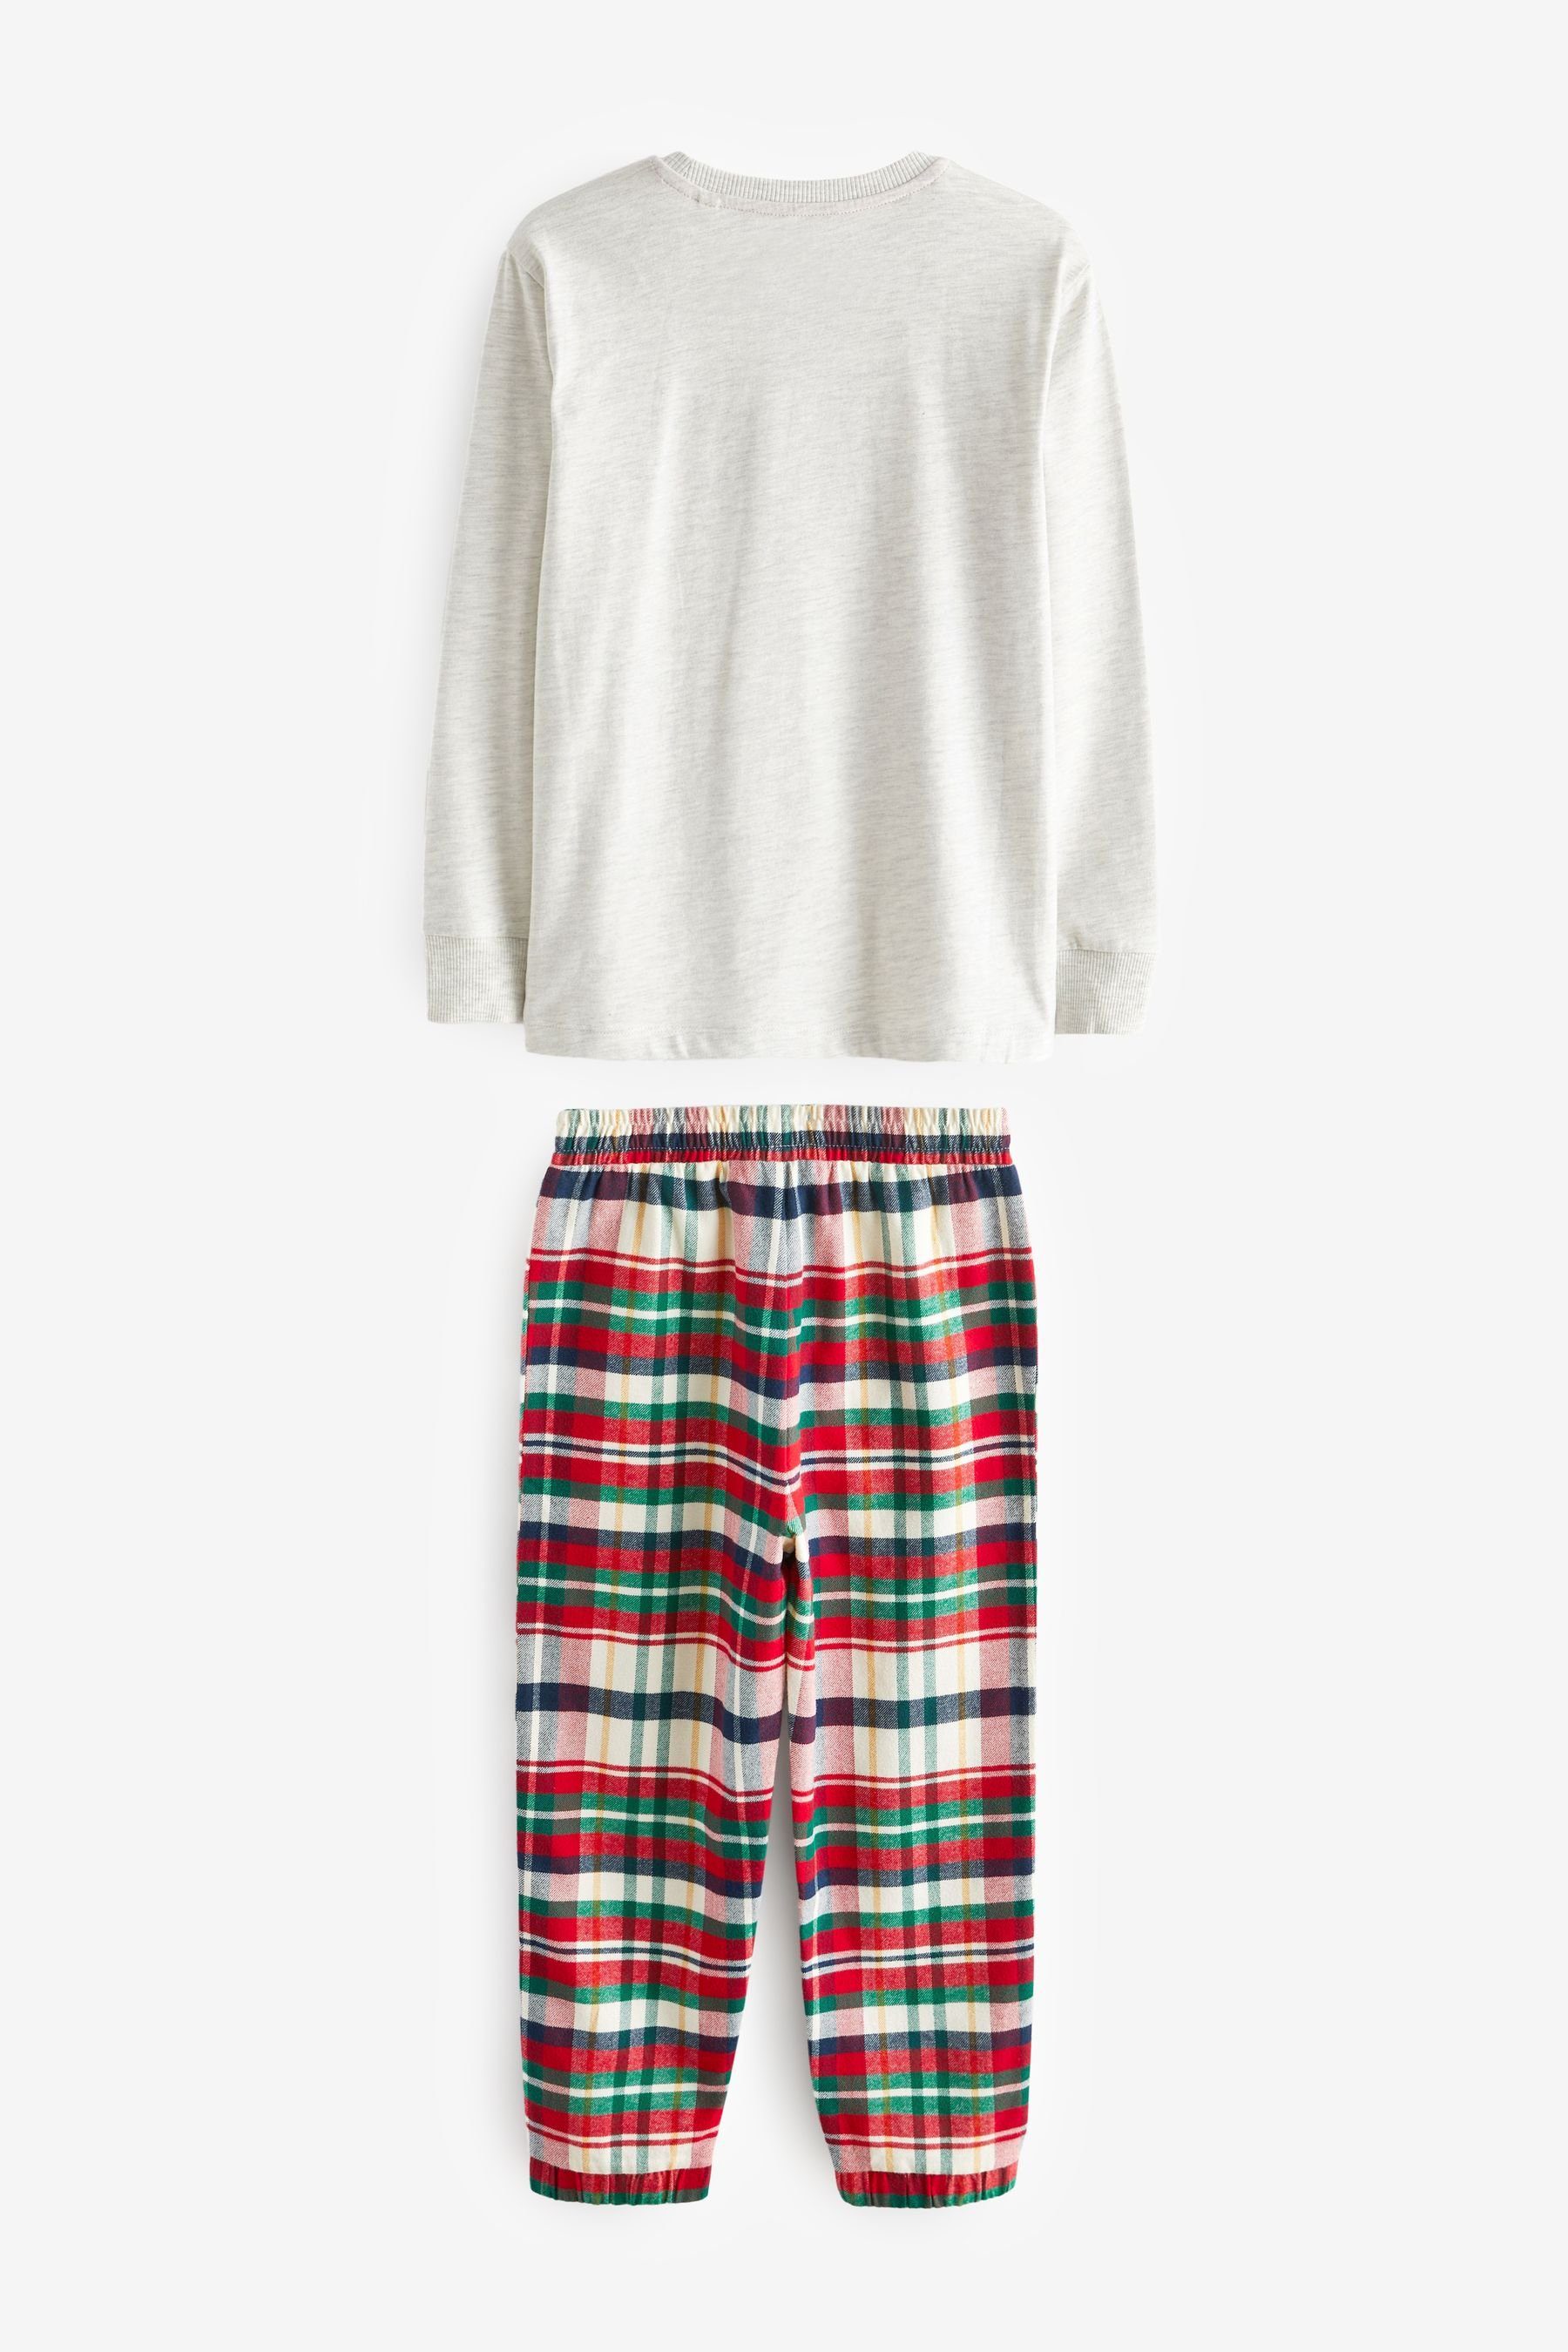 tlg) (Familienkollektion) (2 Next ältere Baumwoll-Pyjama Pyjama Jungen